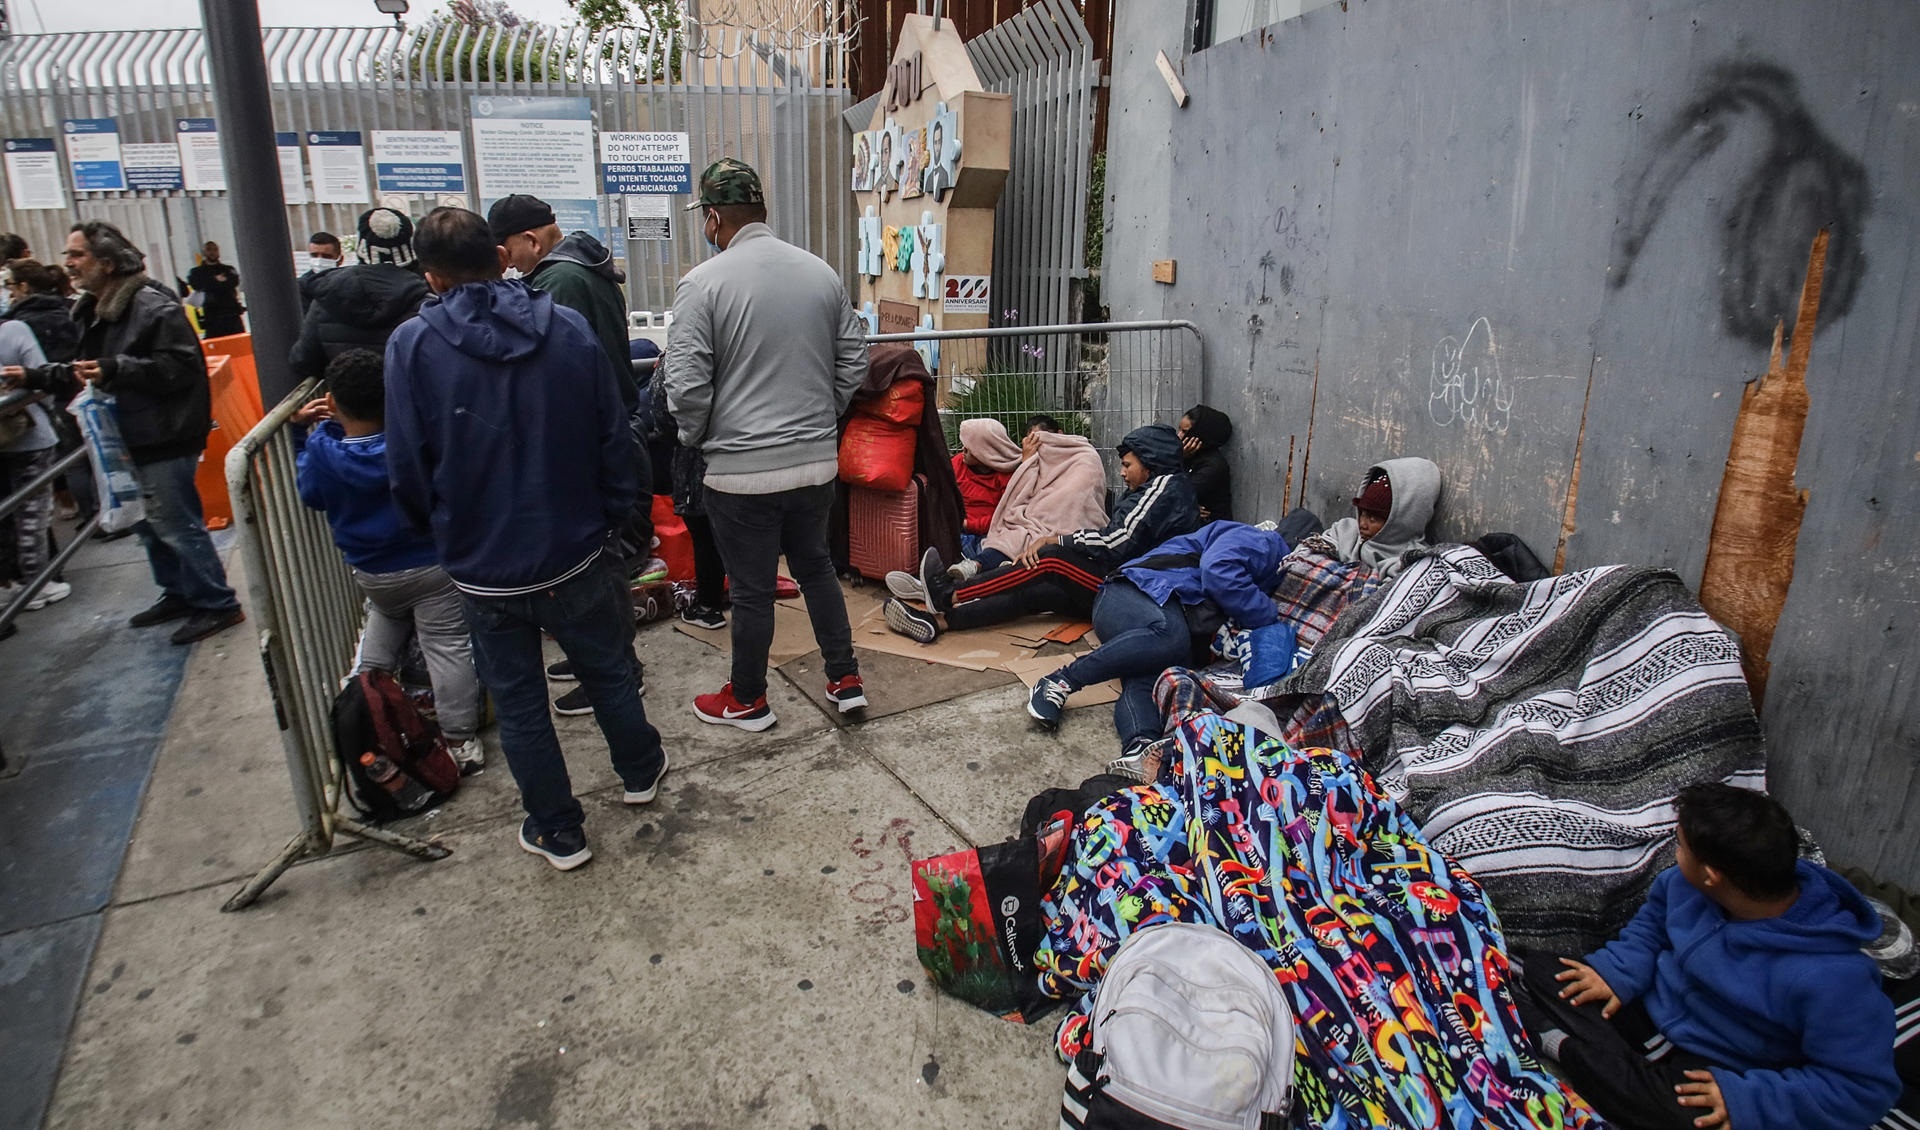 Migrants seeking asylum in the US camp at the border crossing in Tijuana